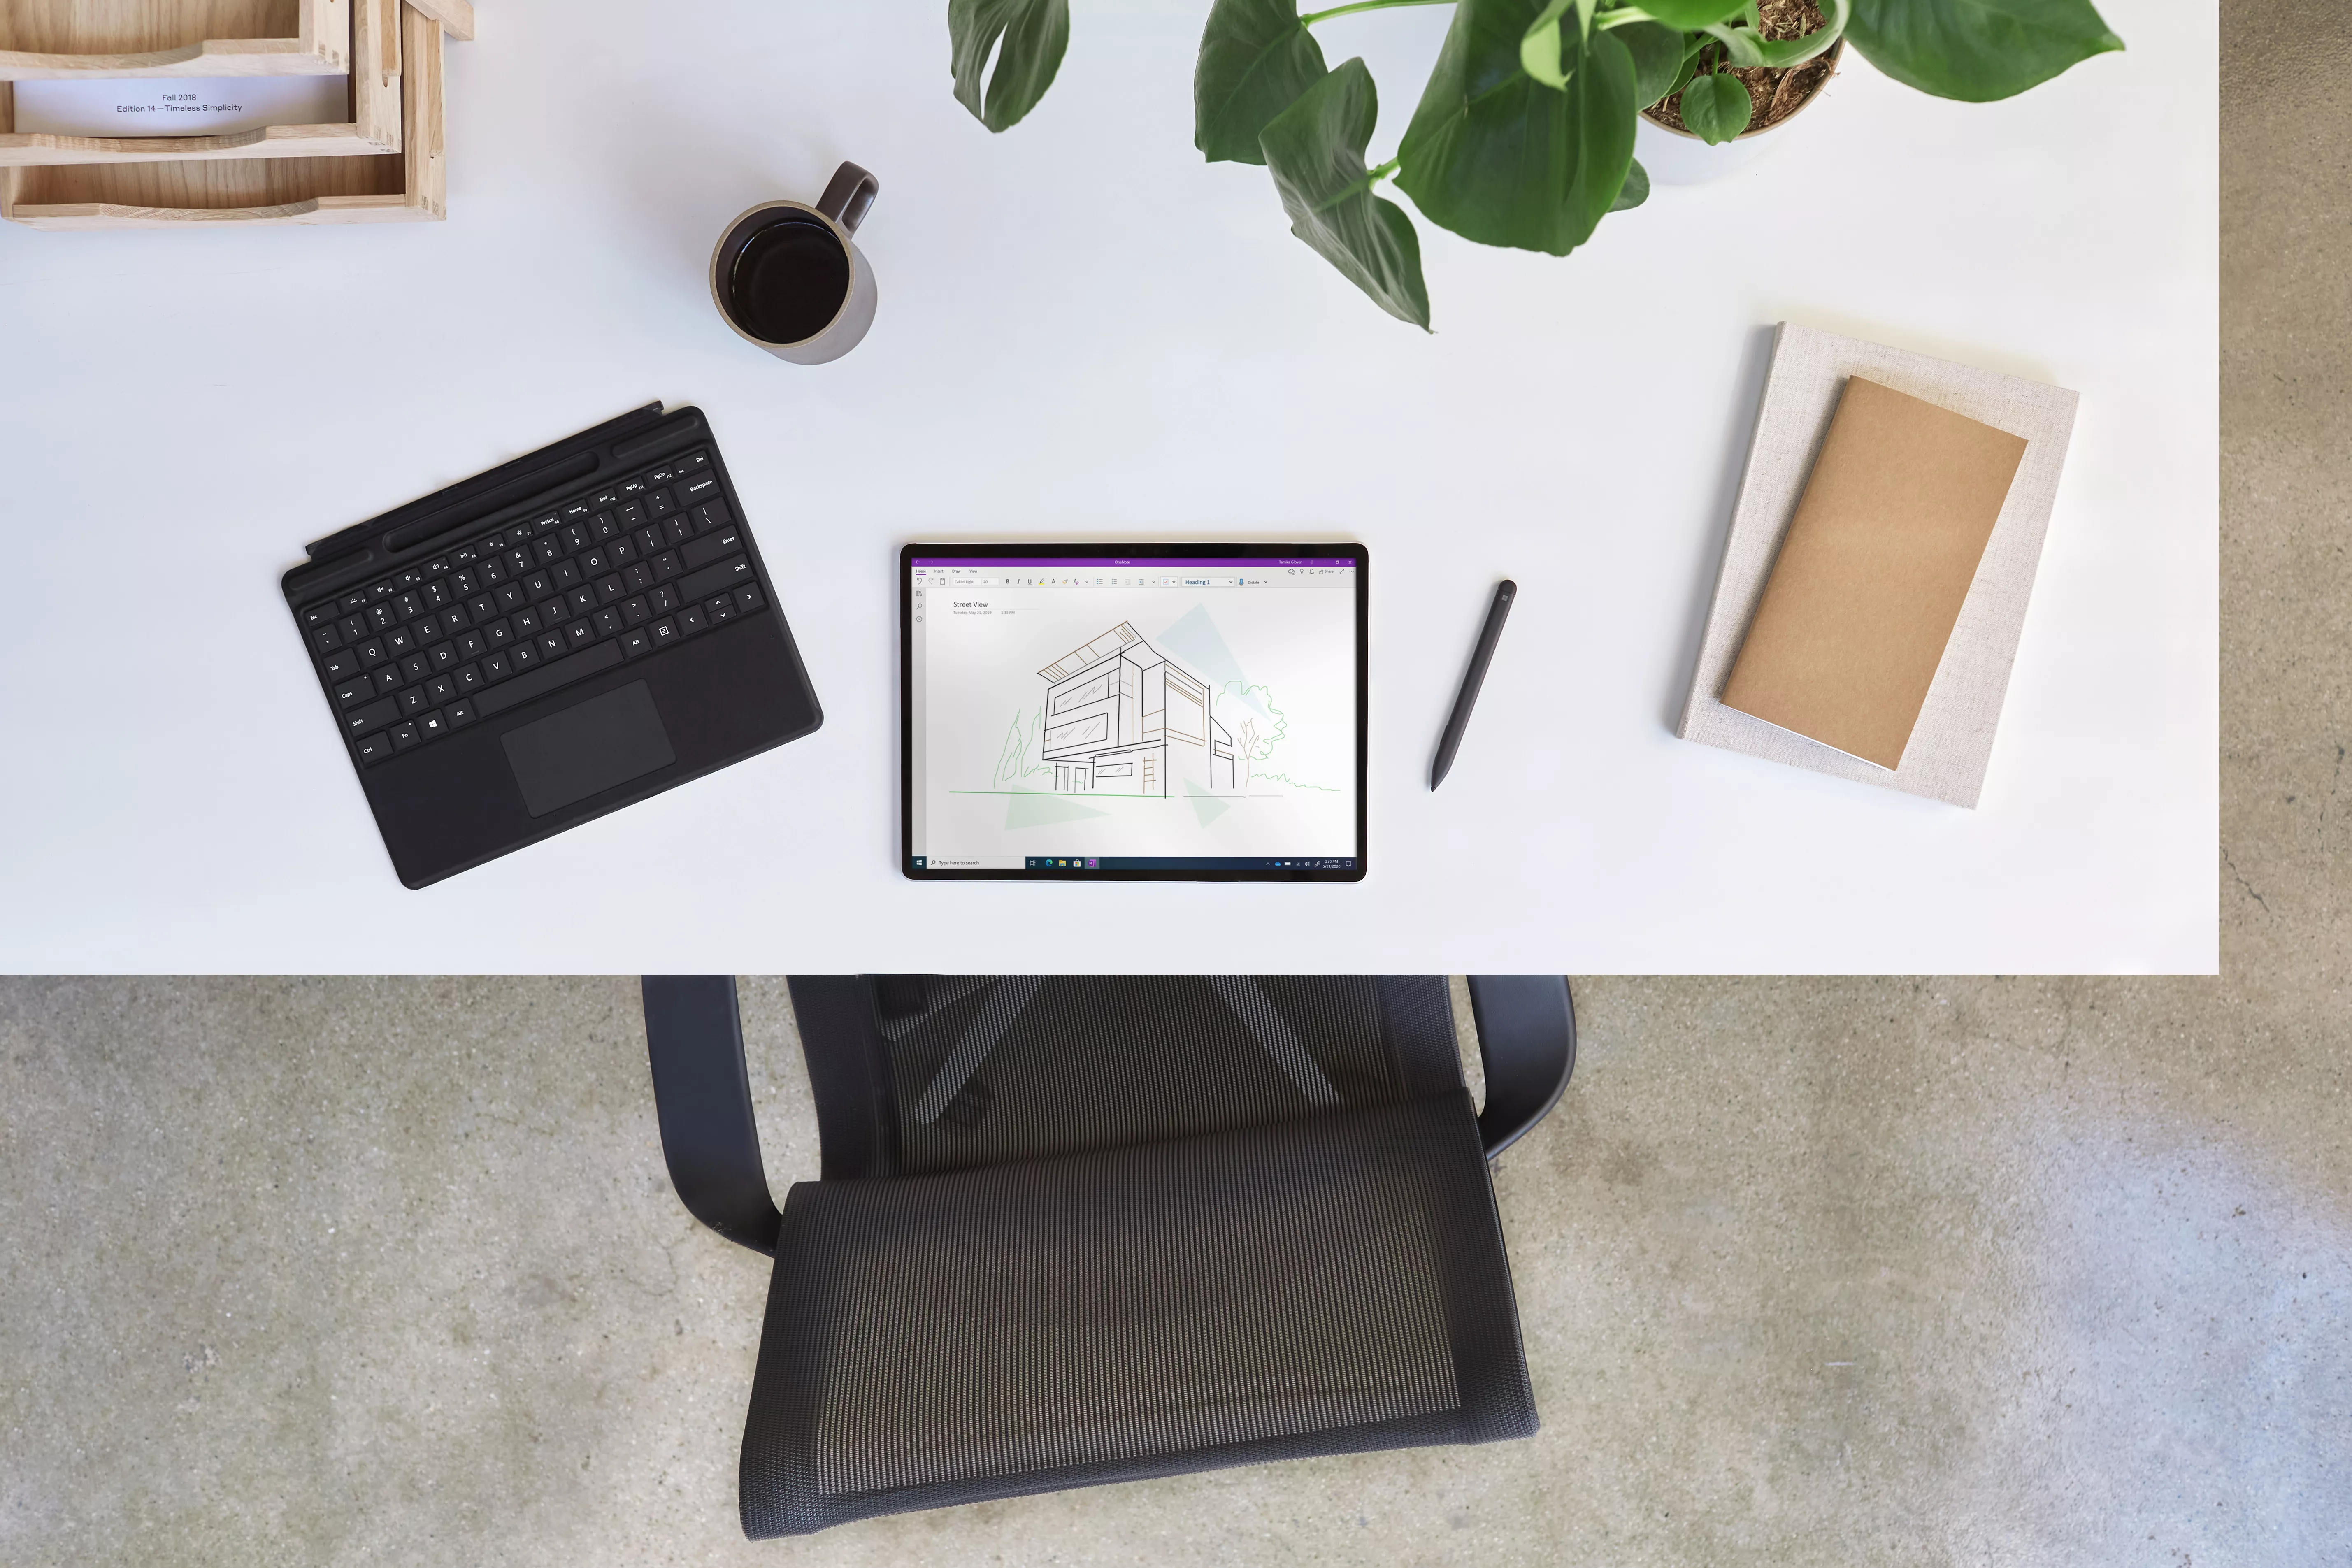 Vente Microsoft Surface MICROSOFT Microsoft au meilleur prix - visuel 2